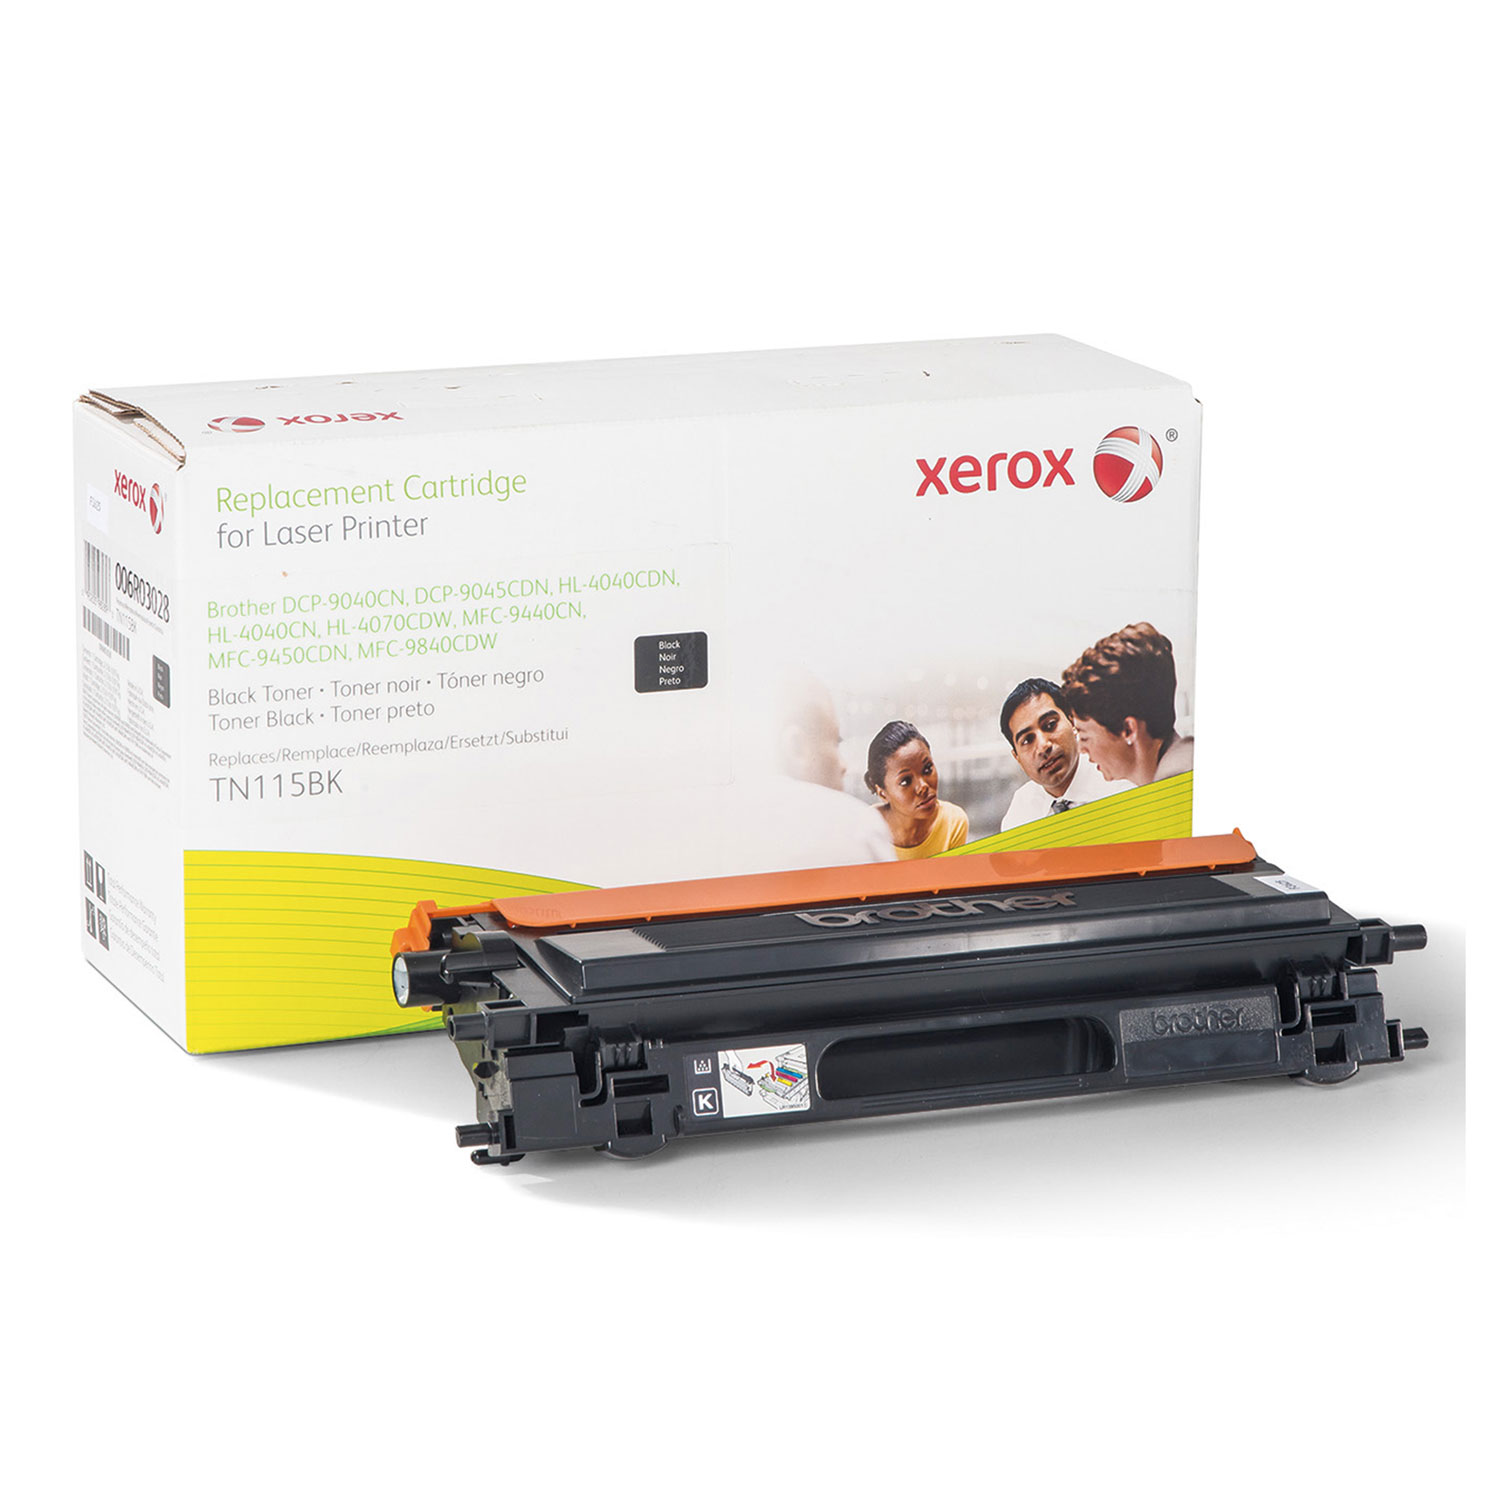  Xerox 006R03028 006R03028 Remanufactured TN115BK High-Yield Toner, Black (XER006R03028) 